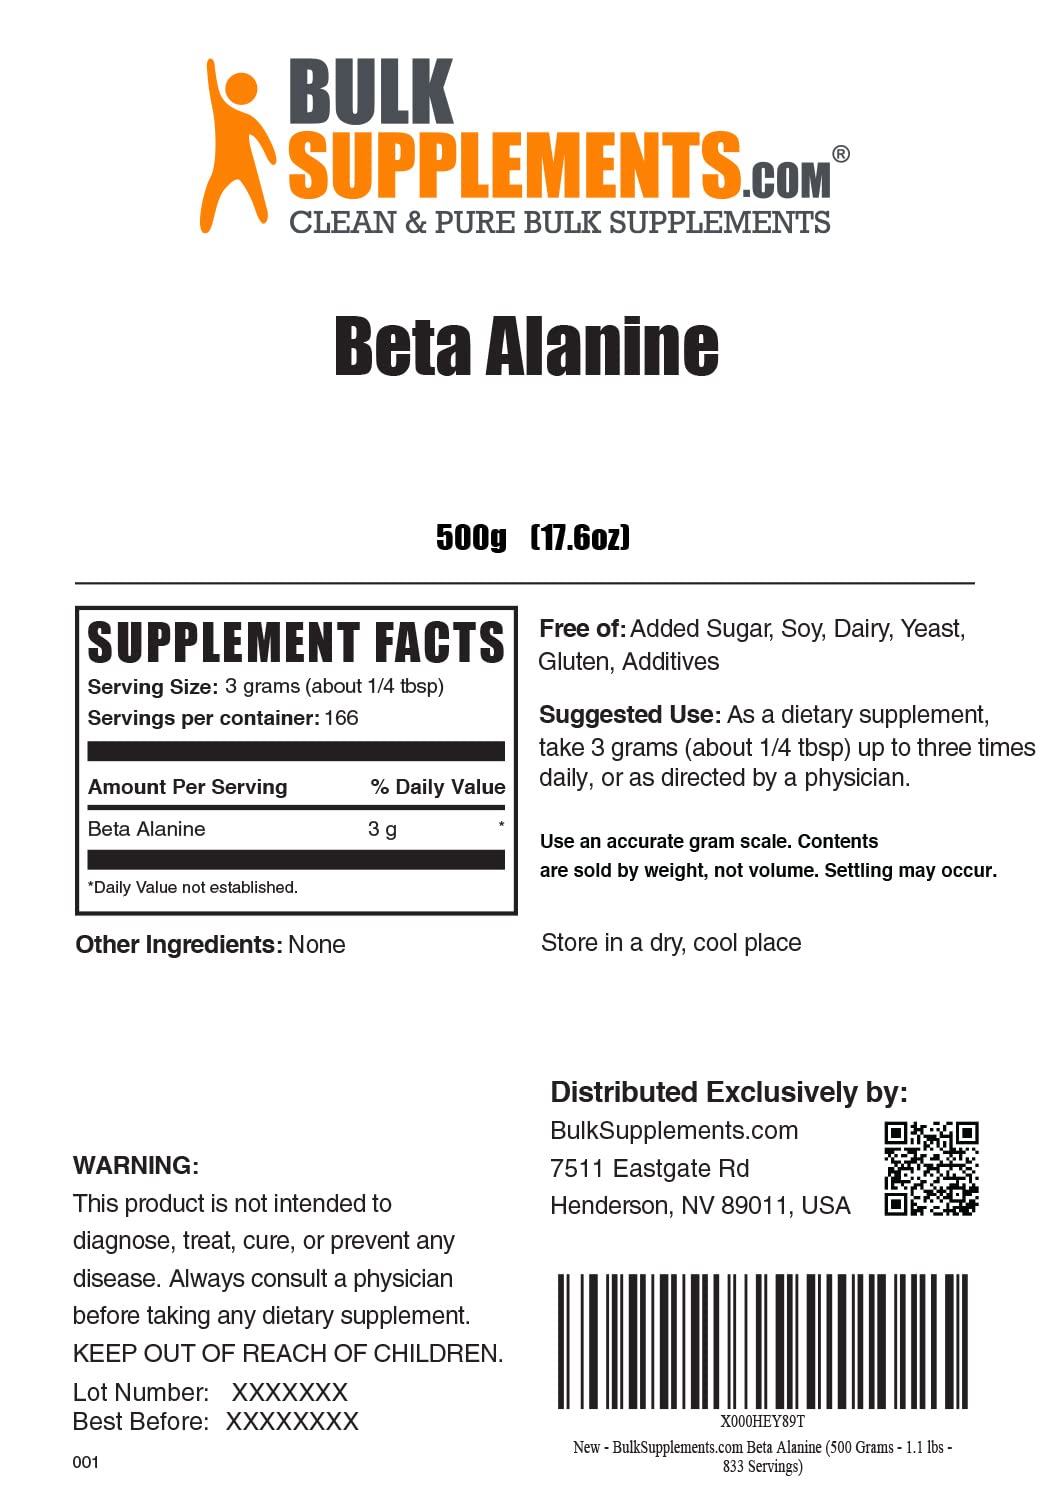 BULKSUPPLEMENTS.COM Creatine Monohydrate Powder (Micronized), 500g with Beta Alanine Powder, 500g - Unflavored, Gluten Free, No Fillers Bundle